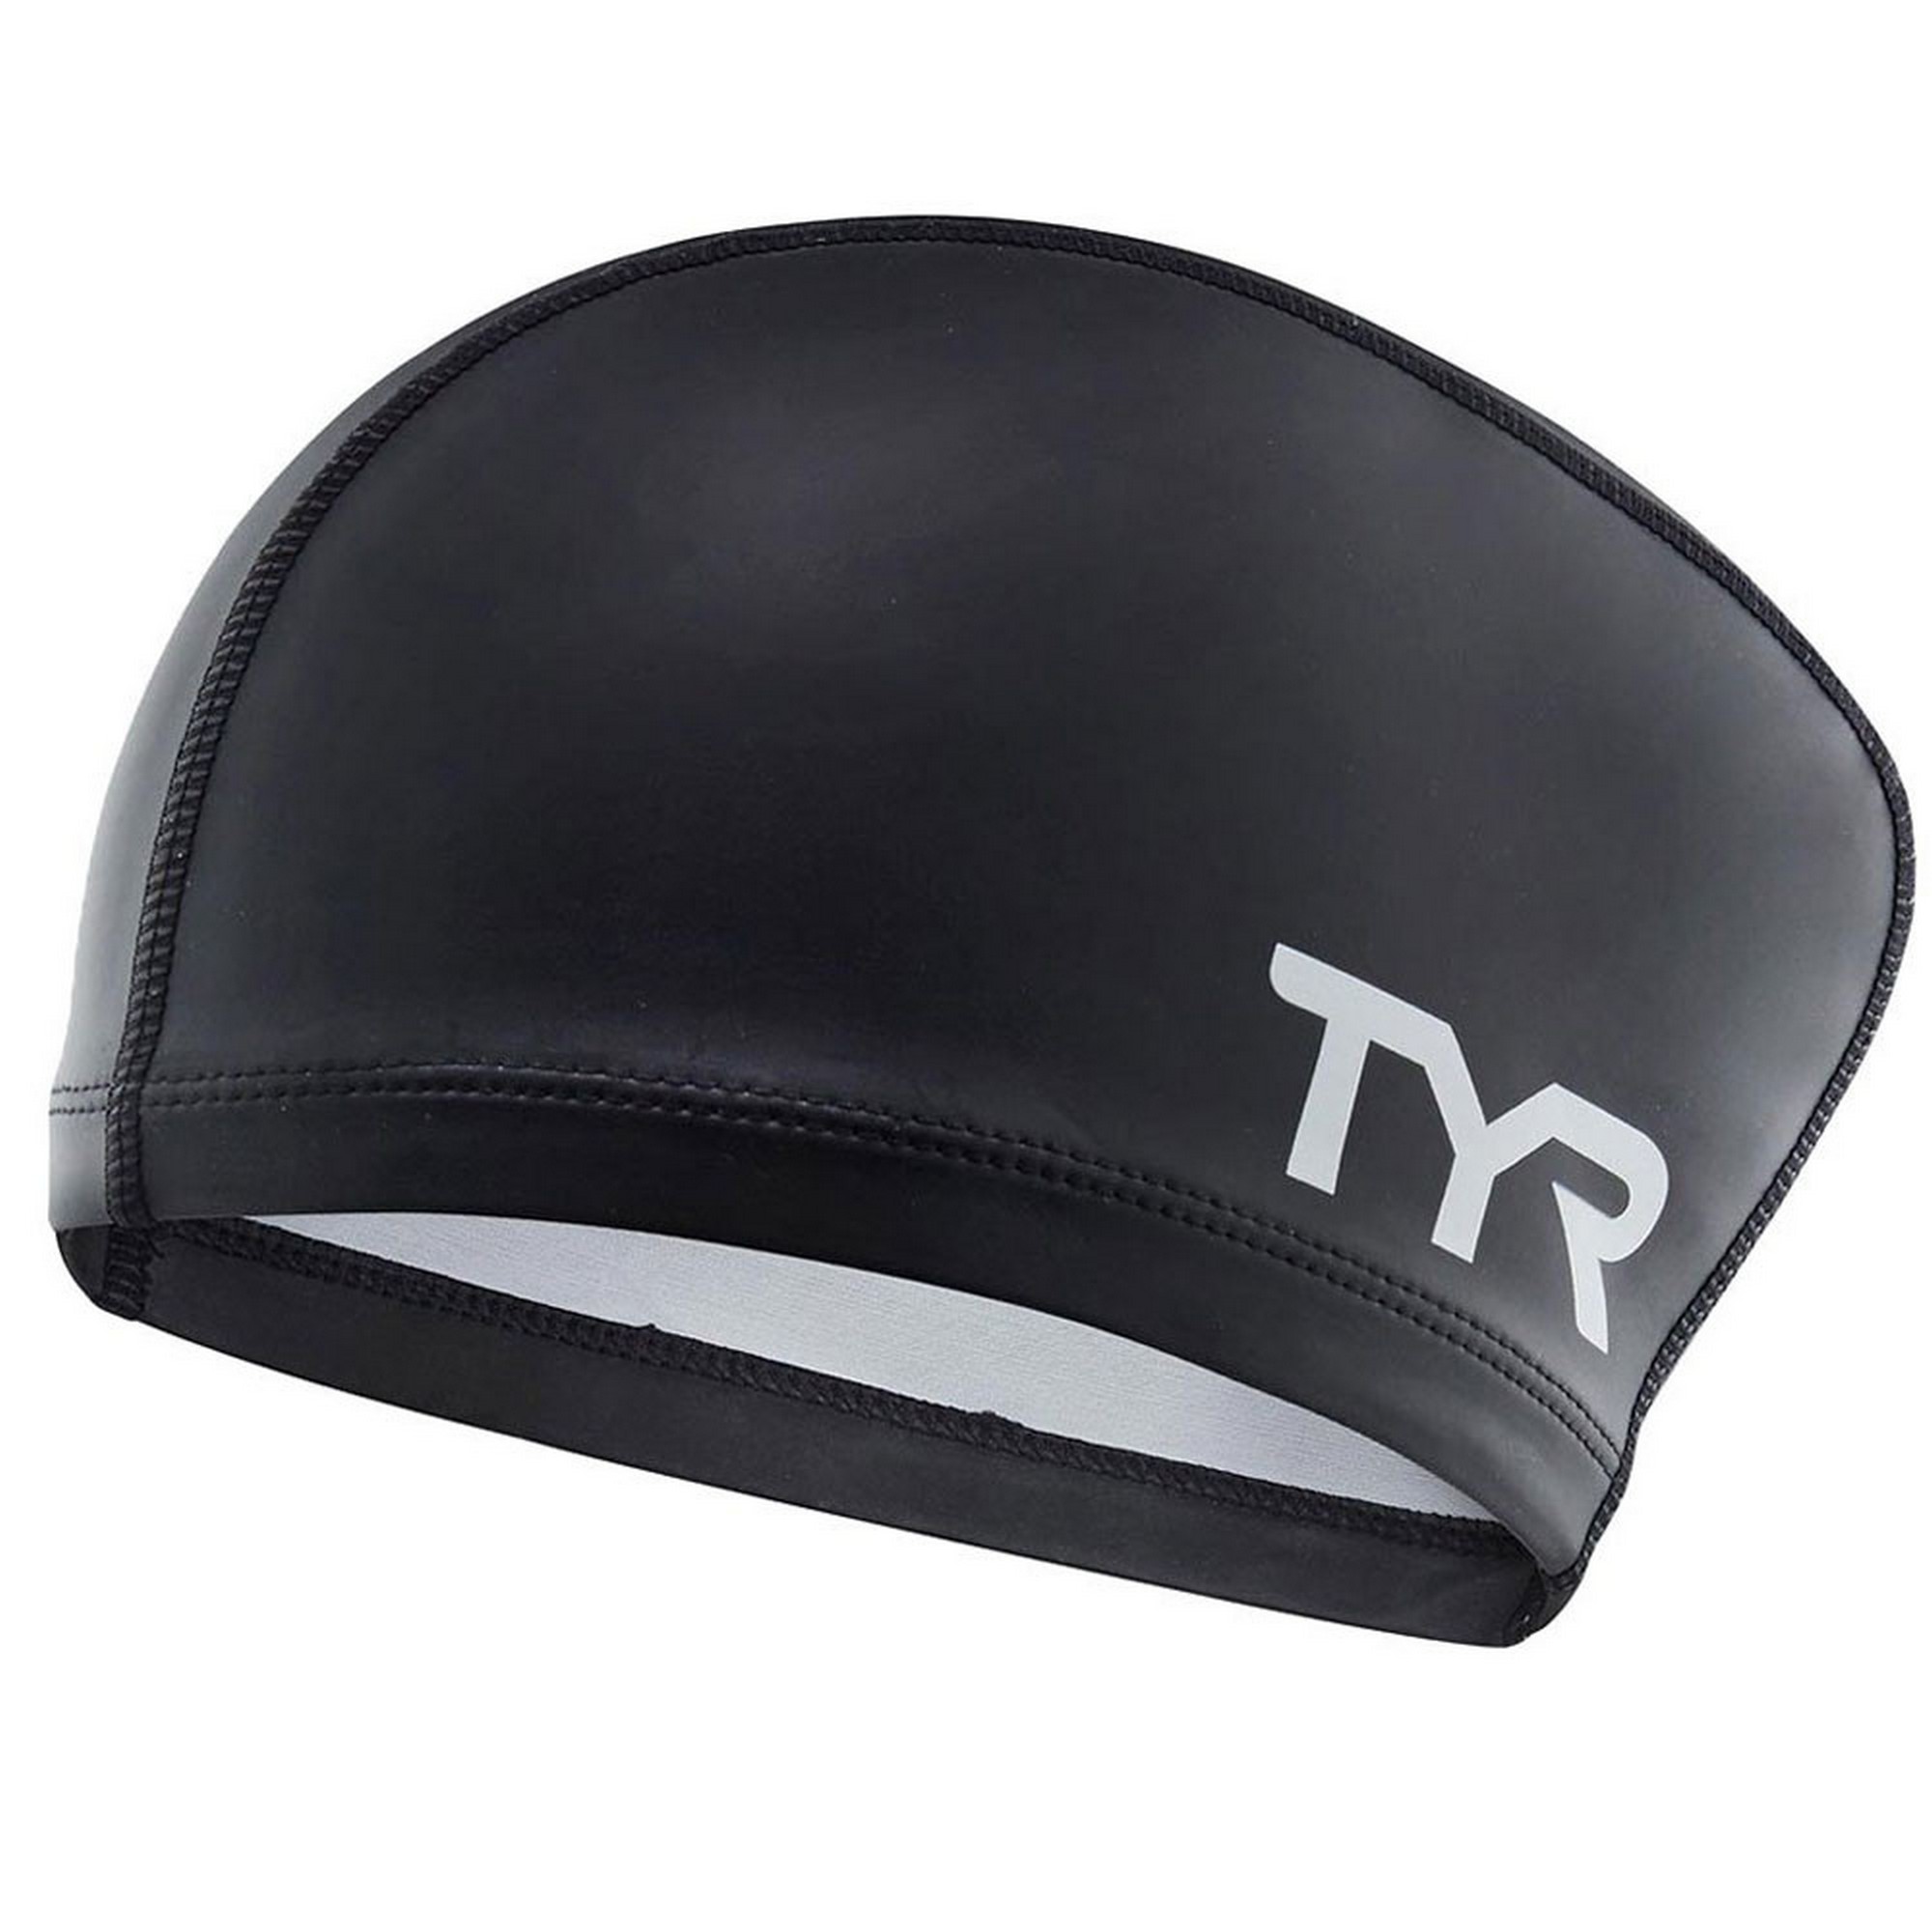    TYR Long Hair Silicone Comfort Swim Cap LSCCAPLH-001 